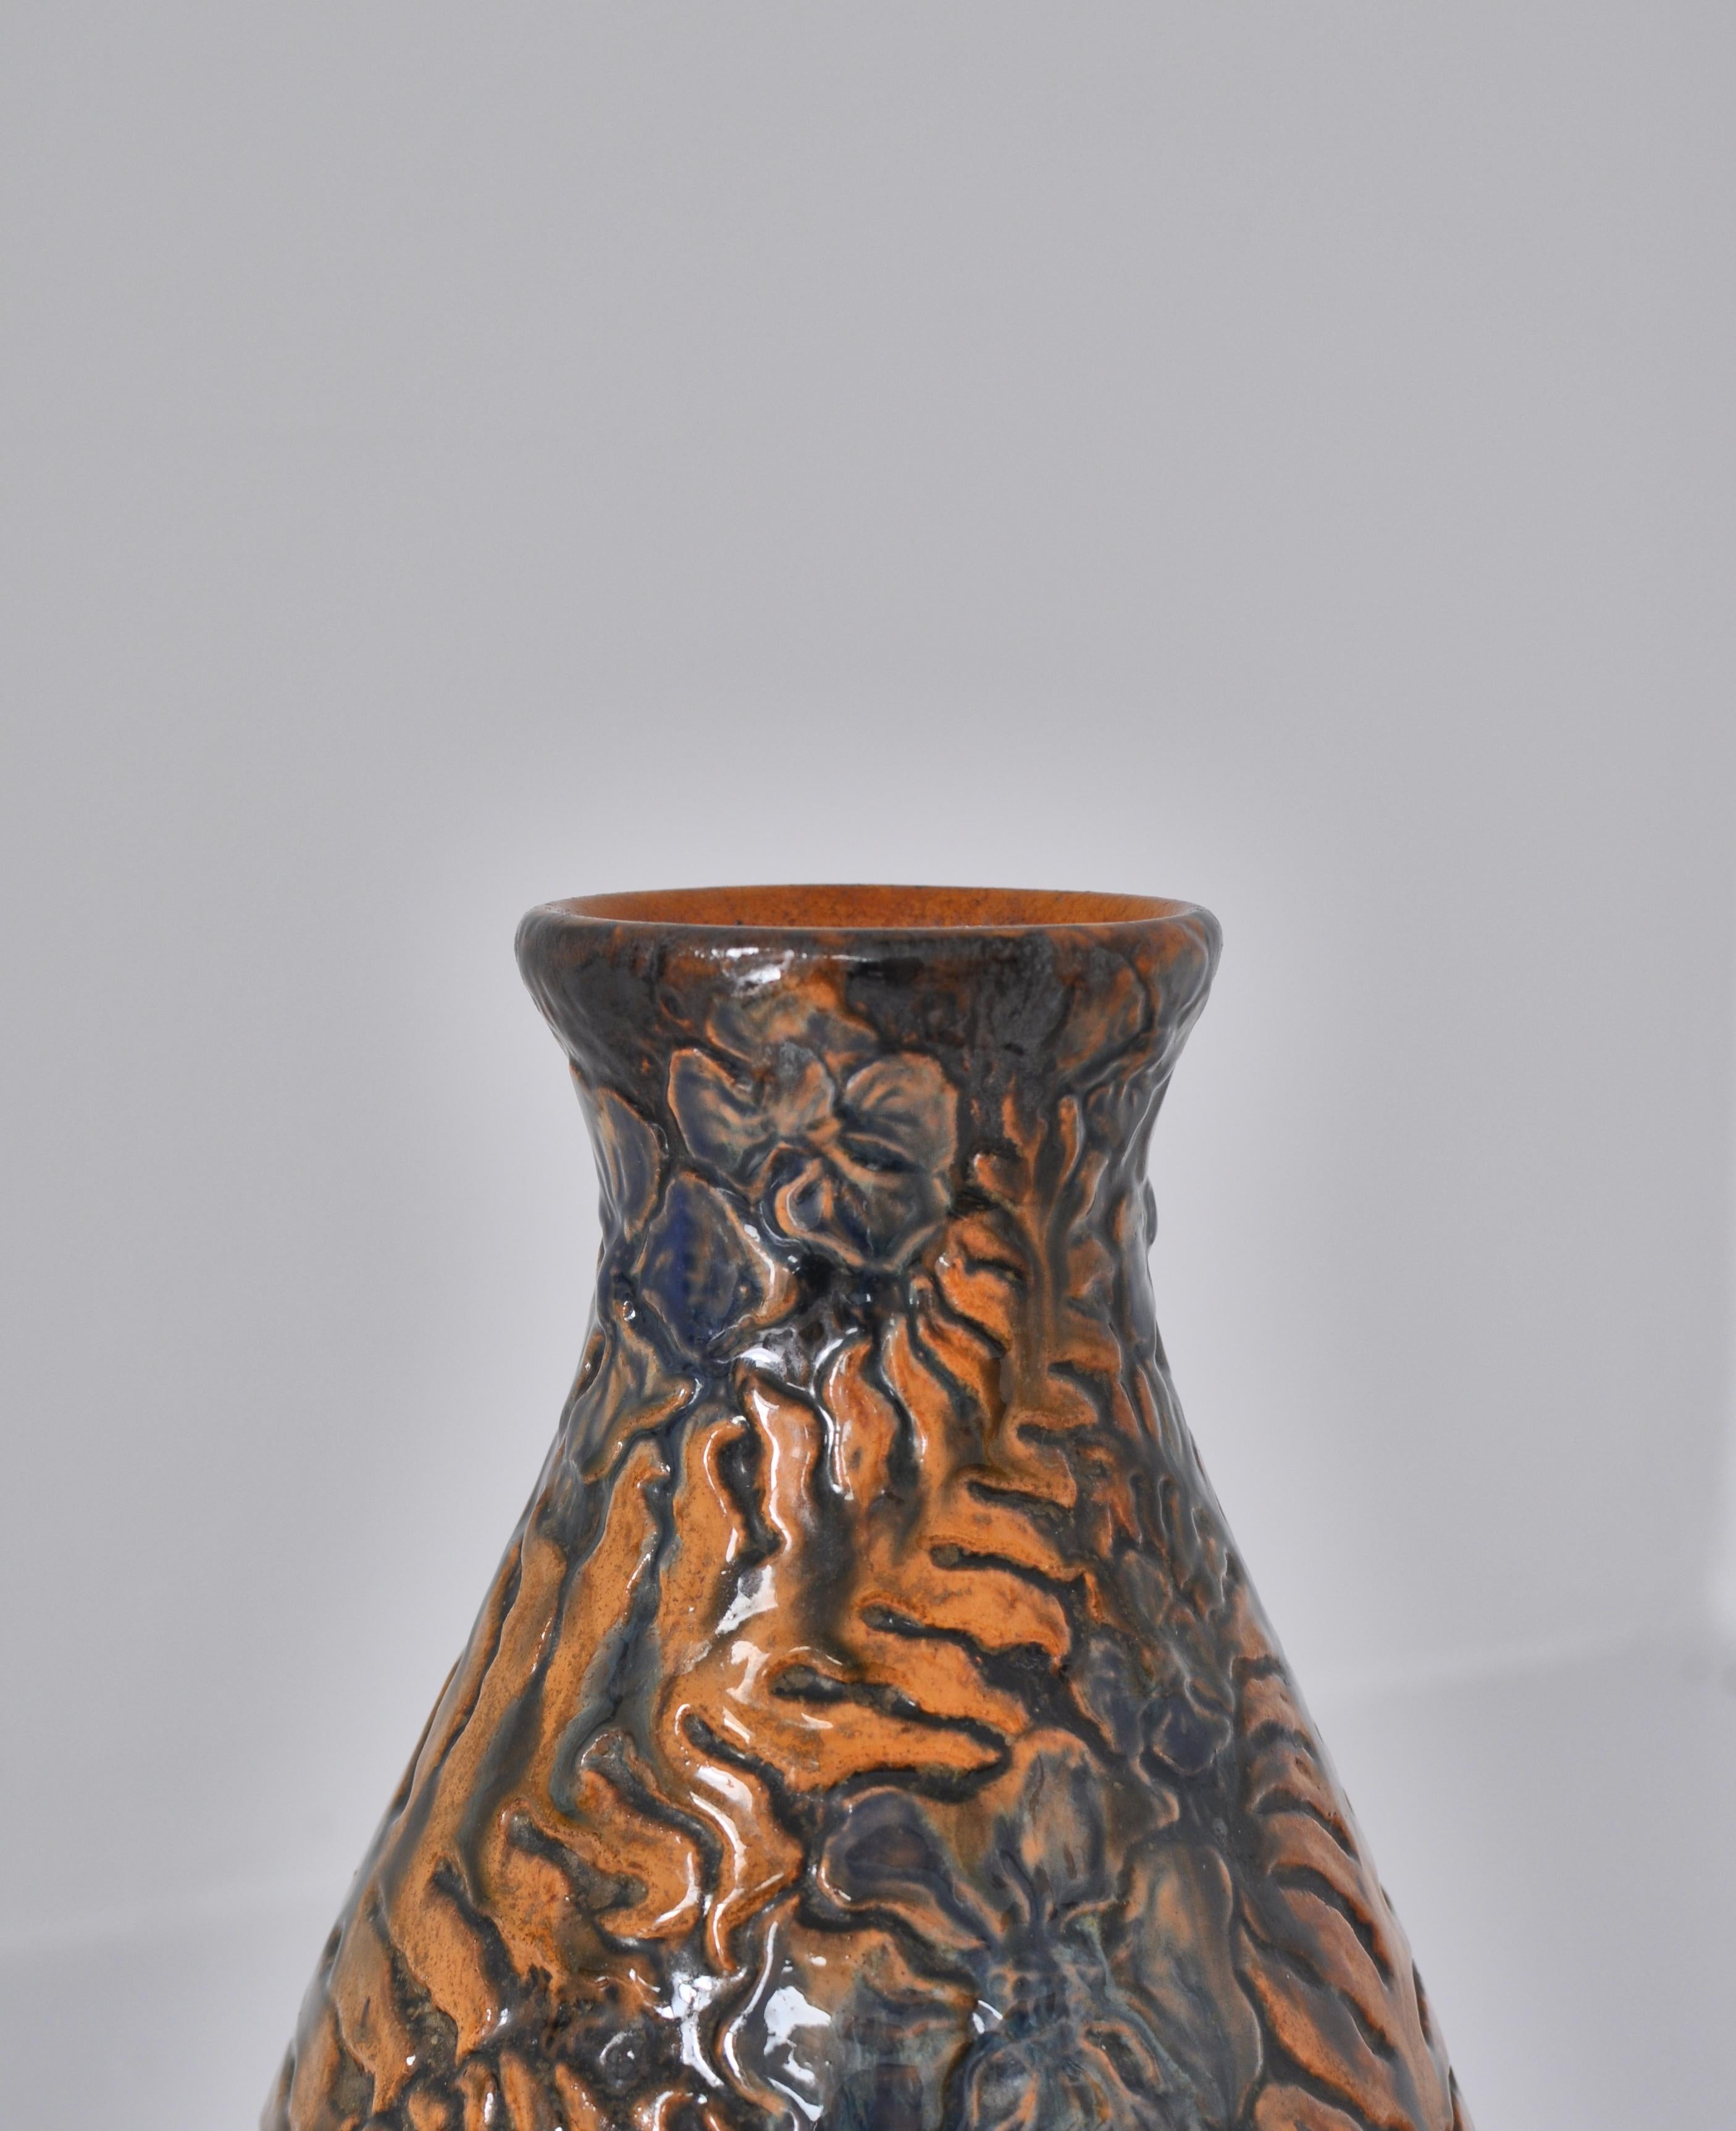 Large Art Nouveau / Jugend Style 1920s Ceramics Vase by MA & Sons, Denmark 1